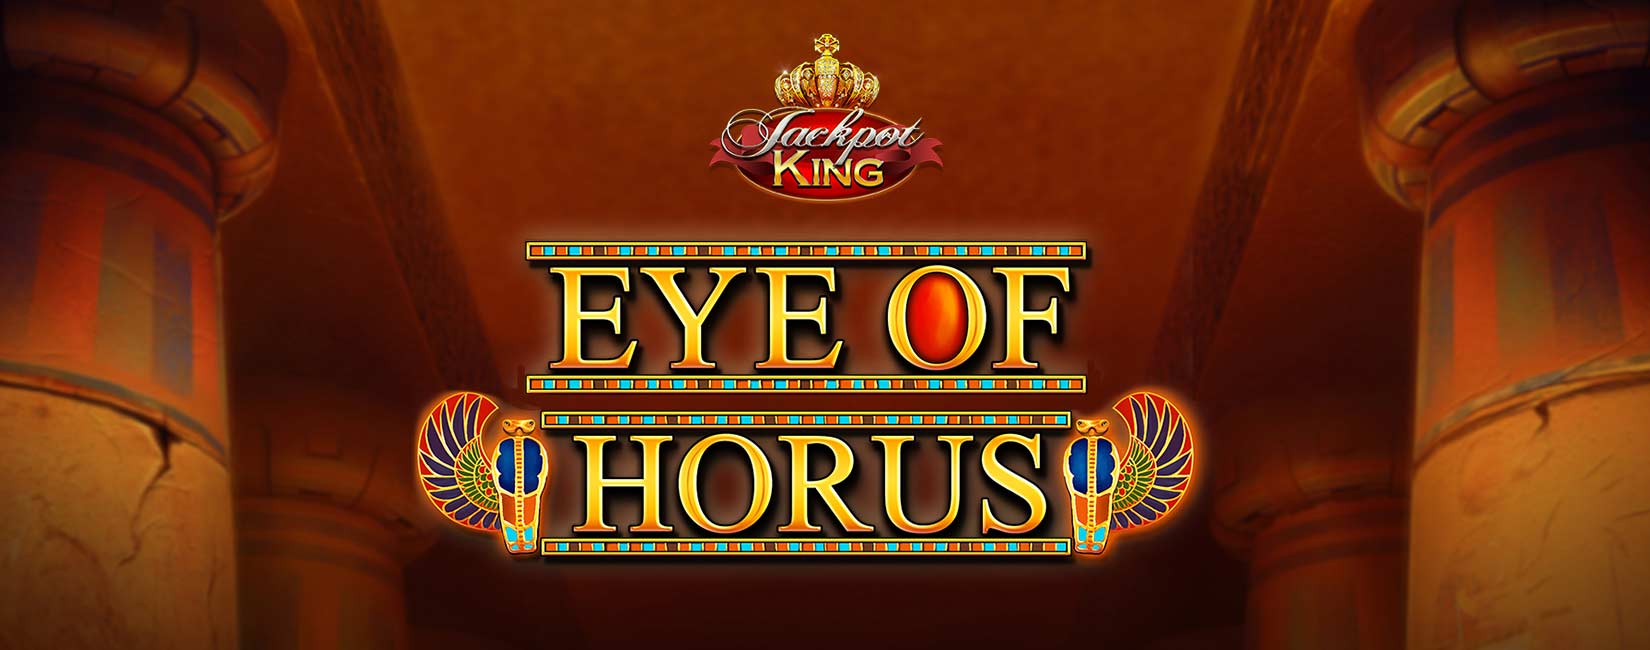 CRE-278941-November Game Reviews-Eye of Horus Jackpot King-GB-static-pp-1650x650